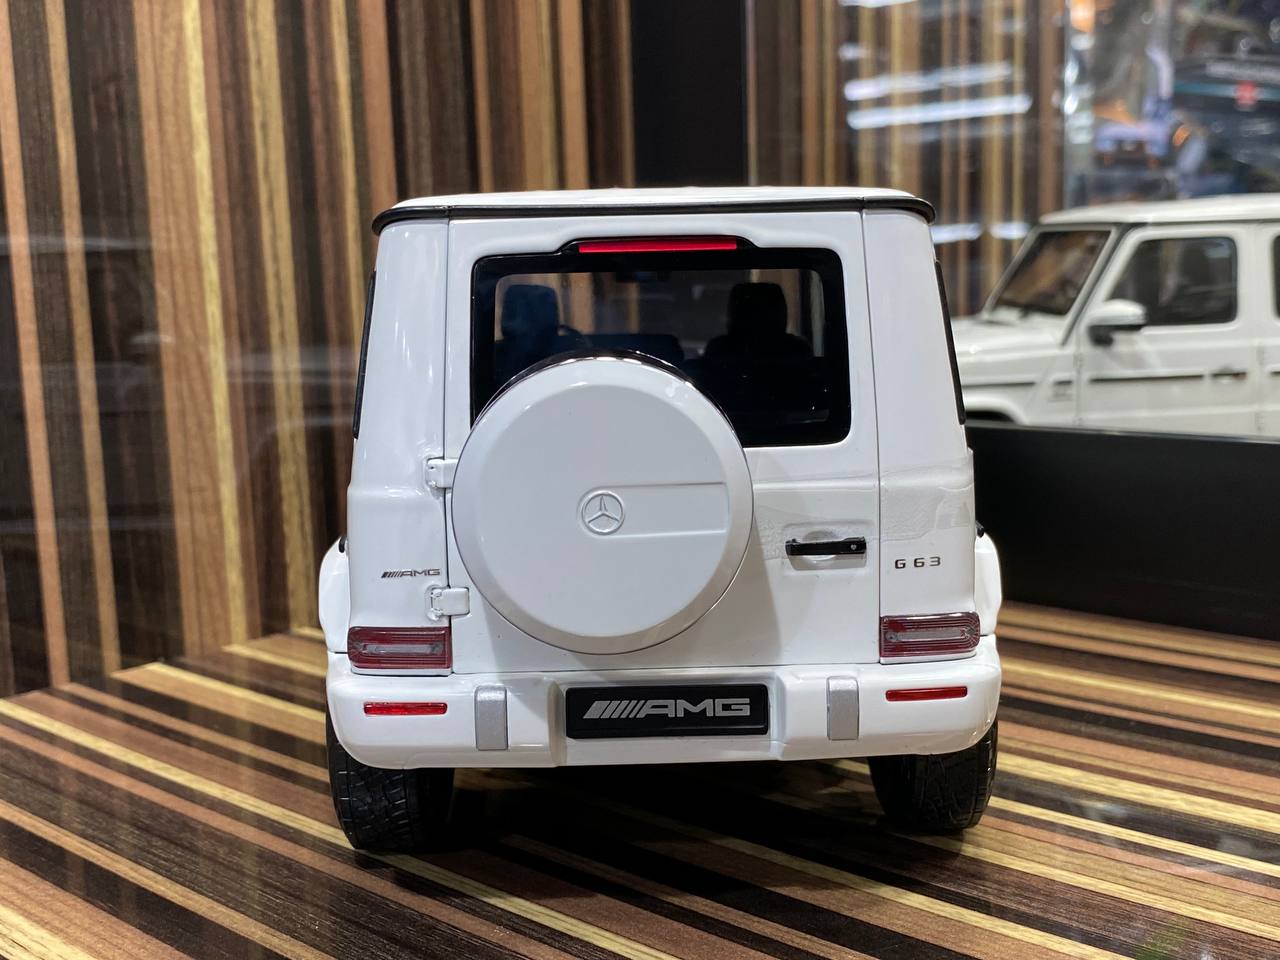 Mercedes-Benz AMG G-63 2018 Minichamps|Sold in Dturman.com Dubai UAE.